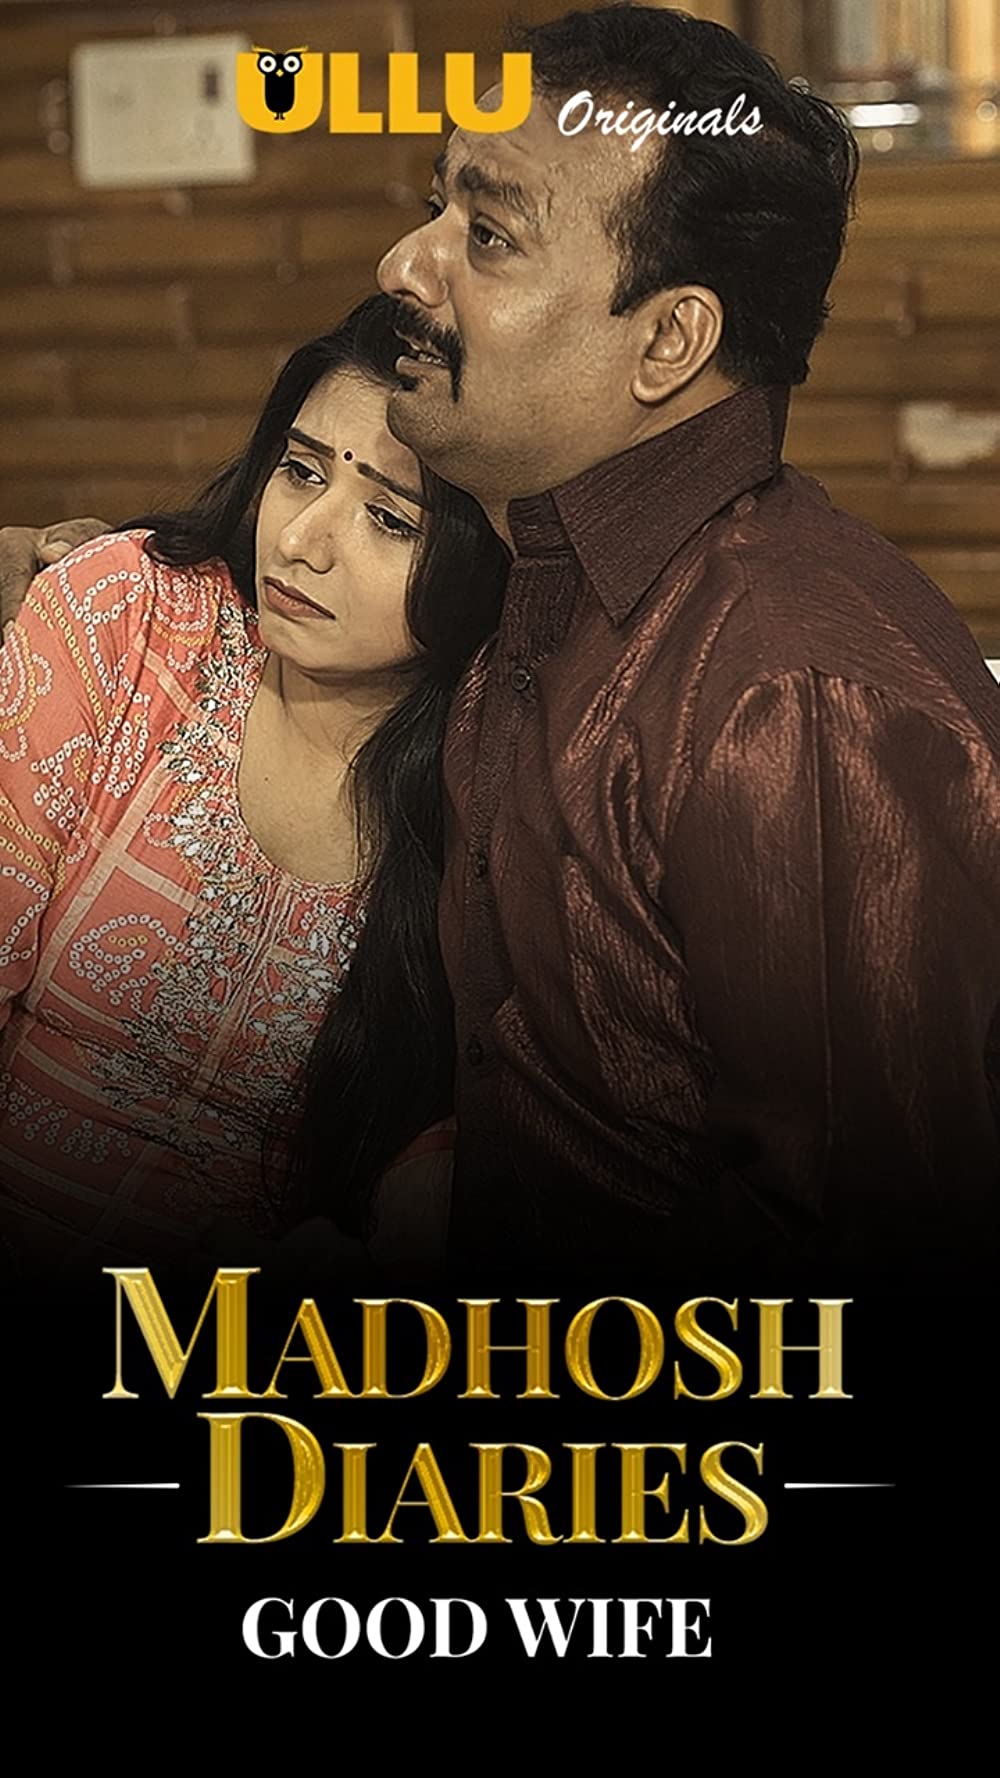 Madhosh Diaries - Good Wife